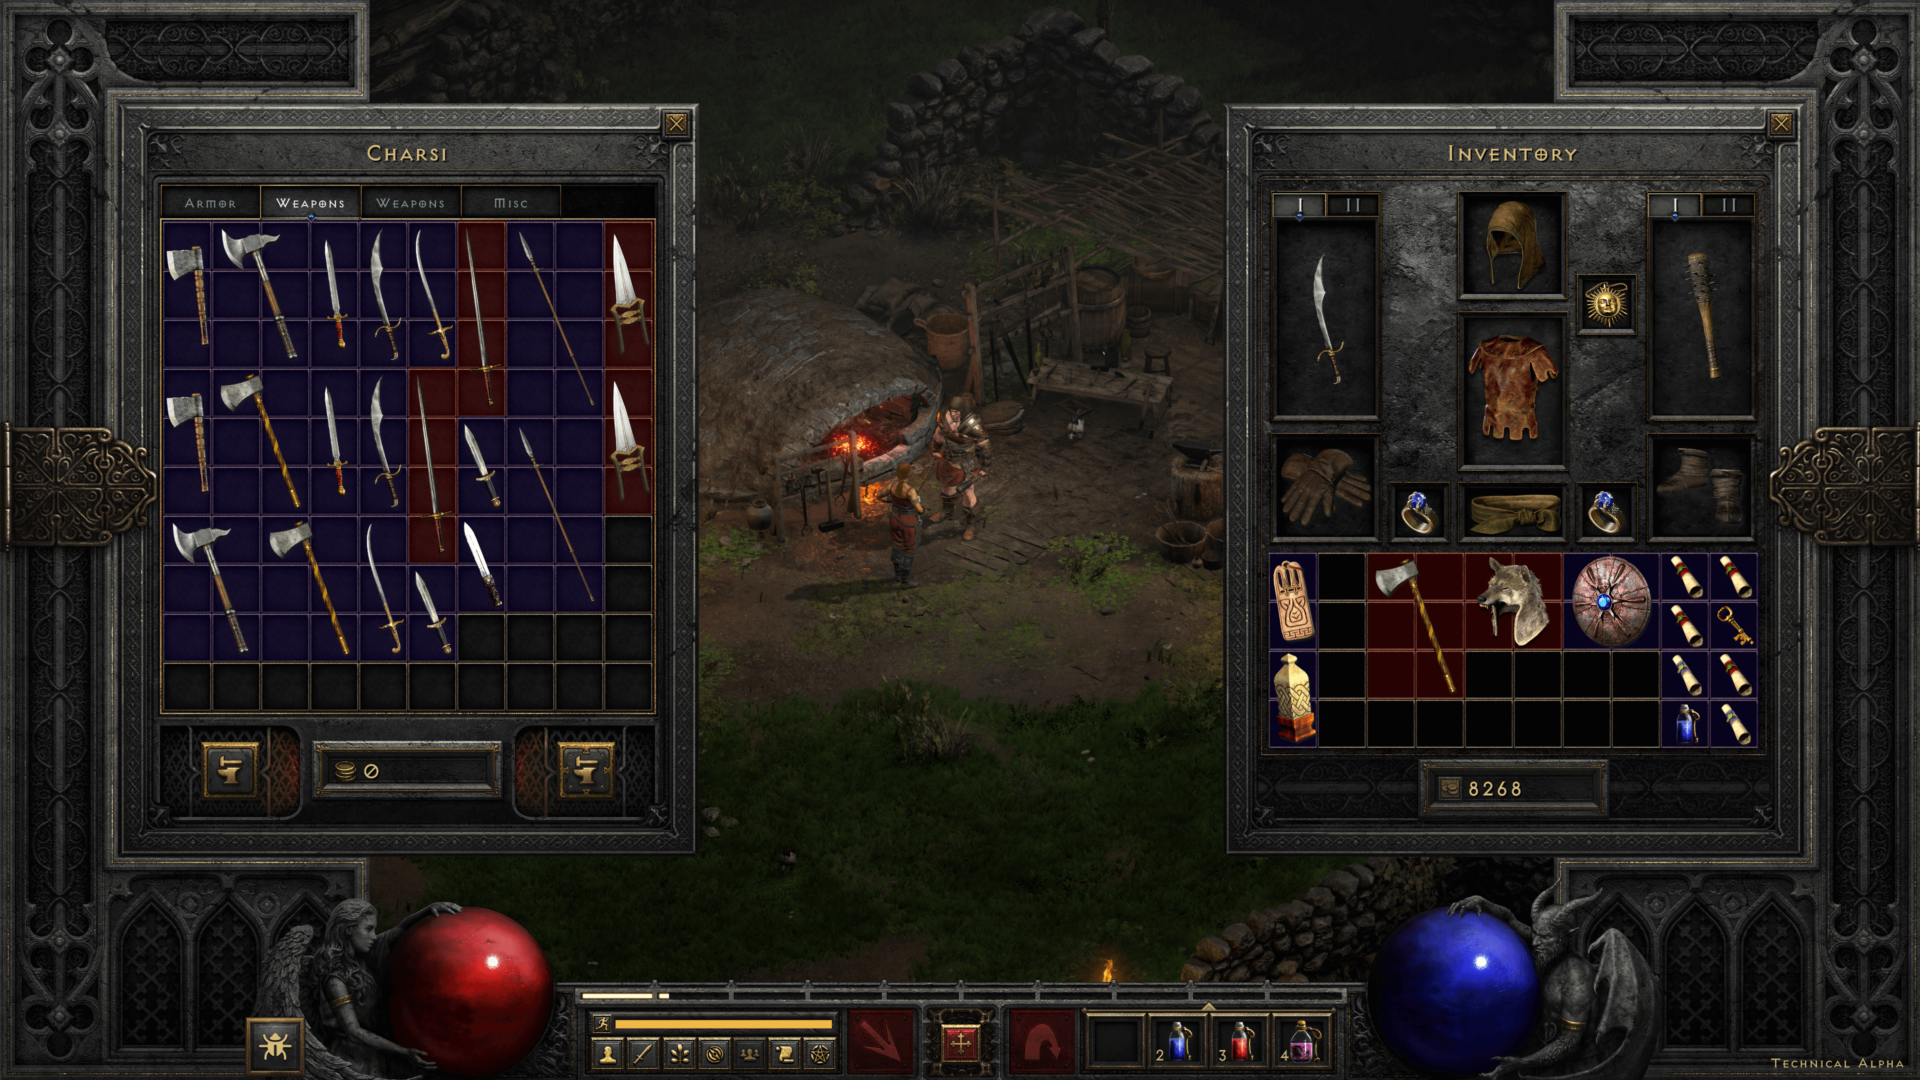 Trade screenshot of Diablo II: Resurrected – Technical Alpha video game interface.